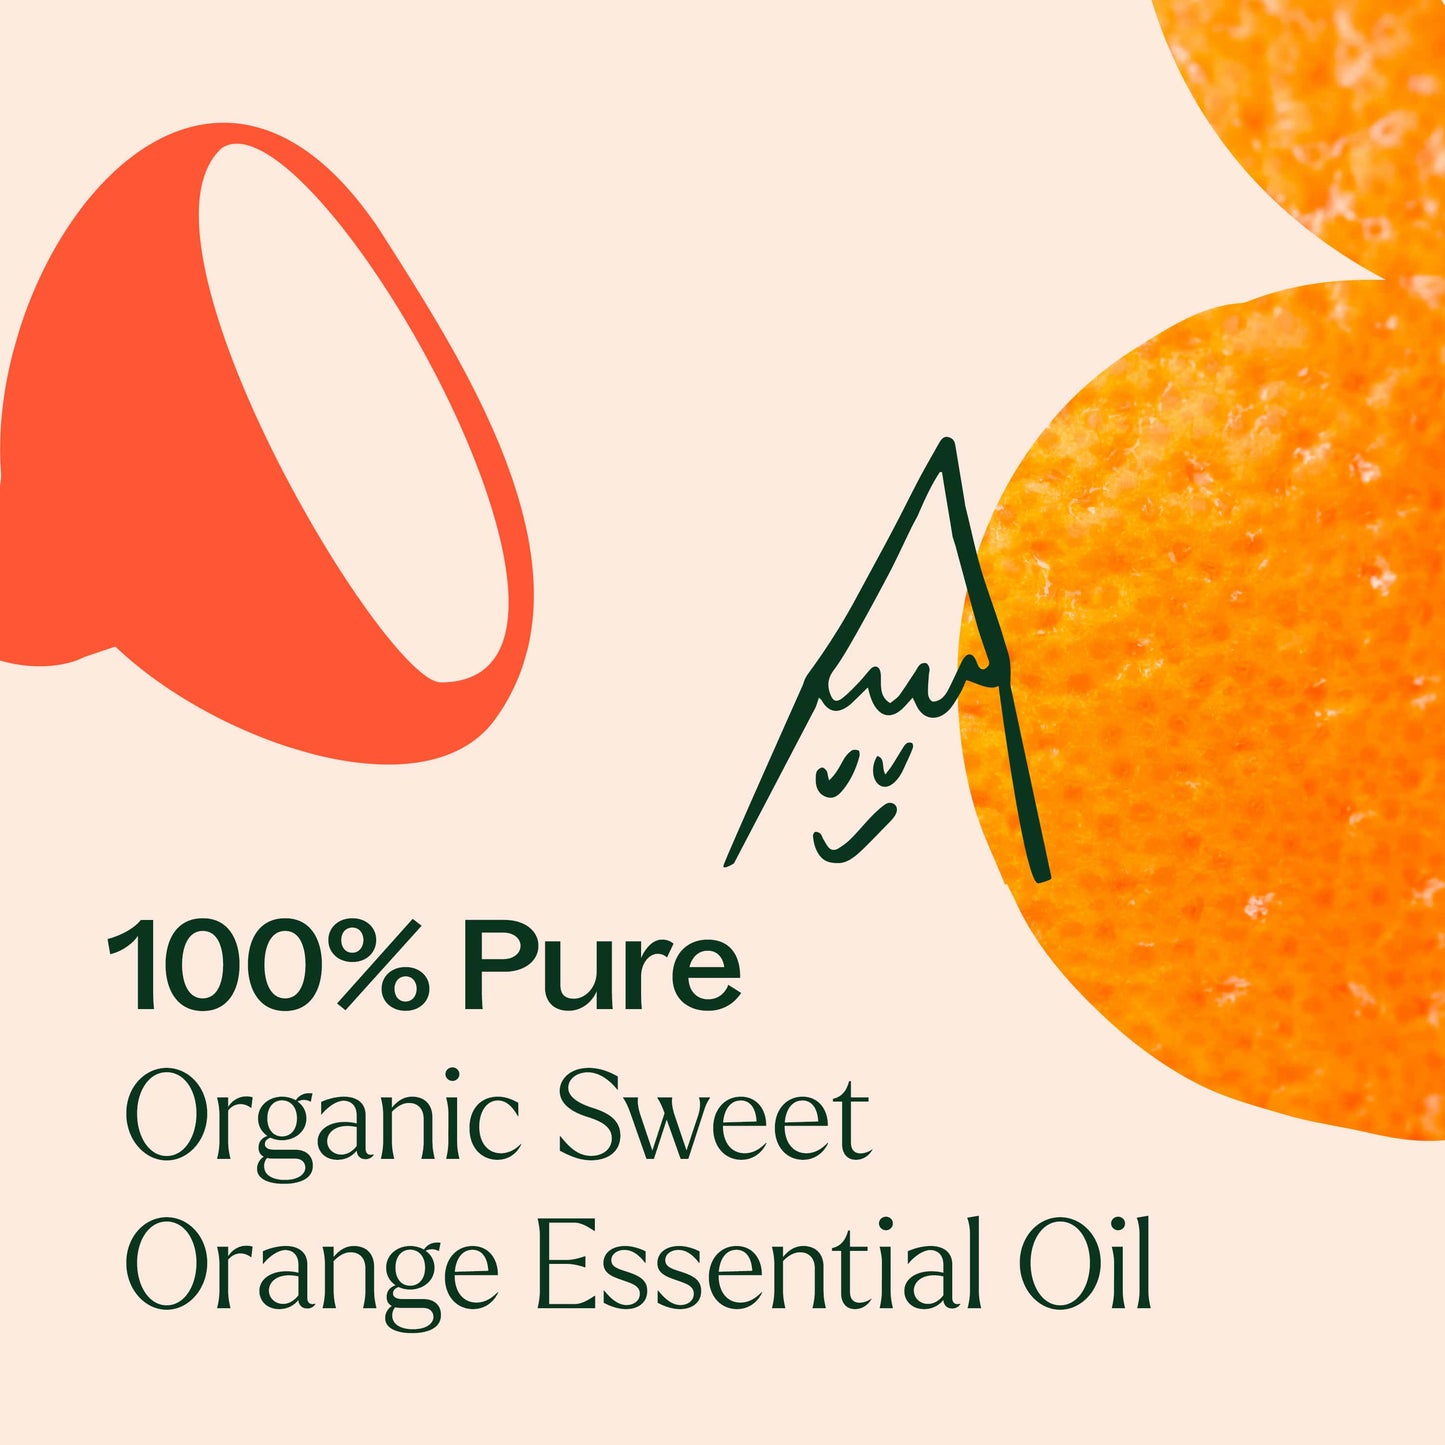 Organic Sweet Orange Essential Oil is 100% pure